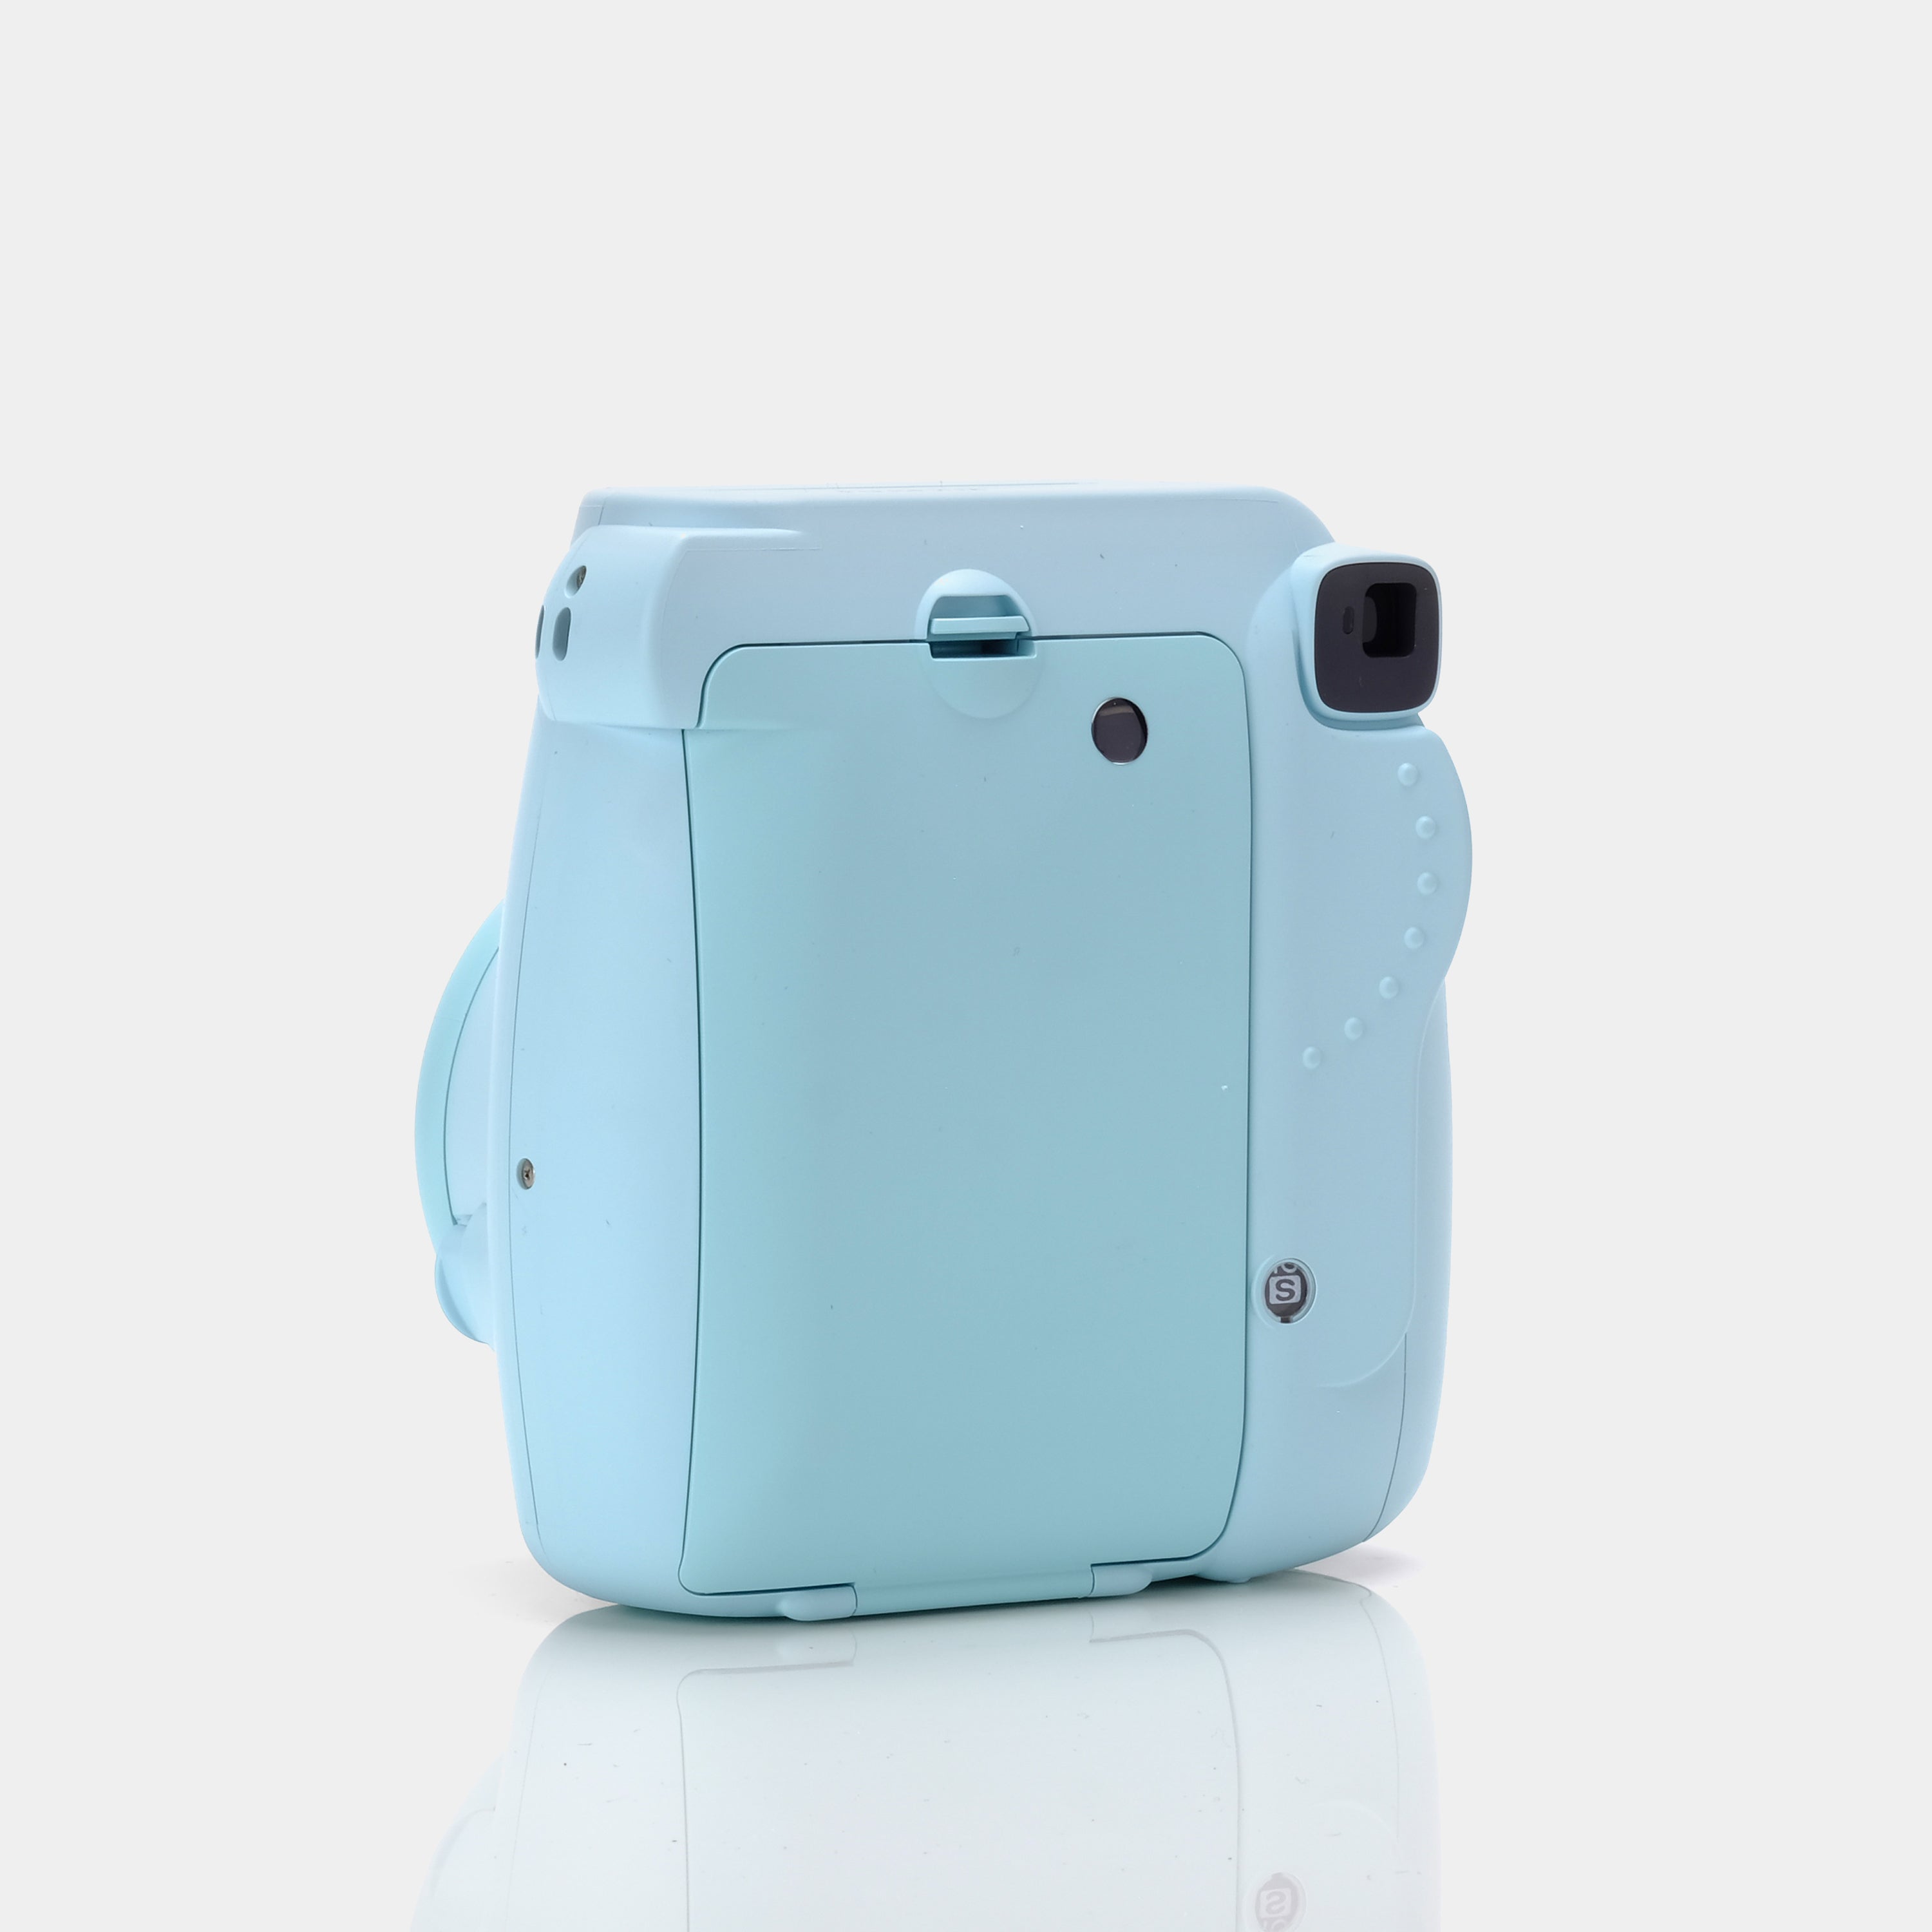 Fujifilm Instax Mini 9 Blue Instant Film Camera With Blue Bag - Refurbished